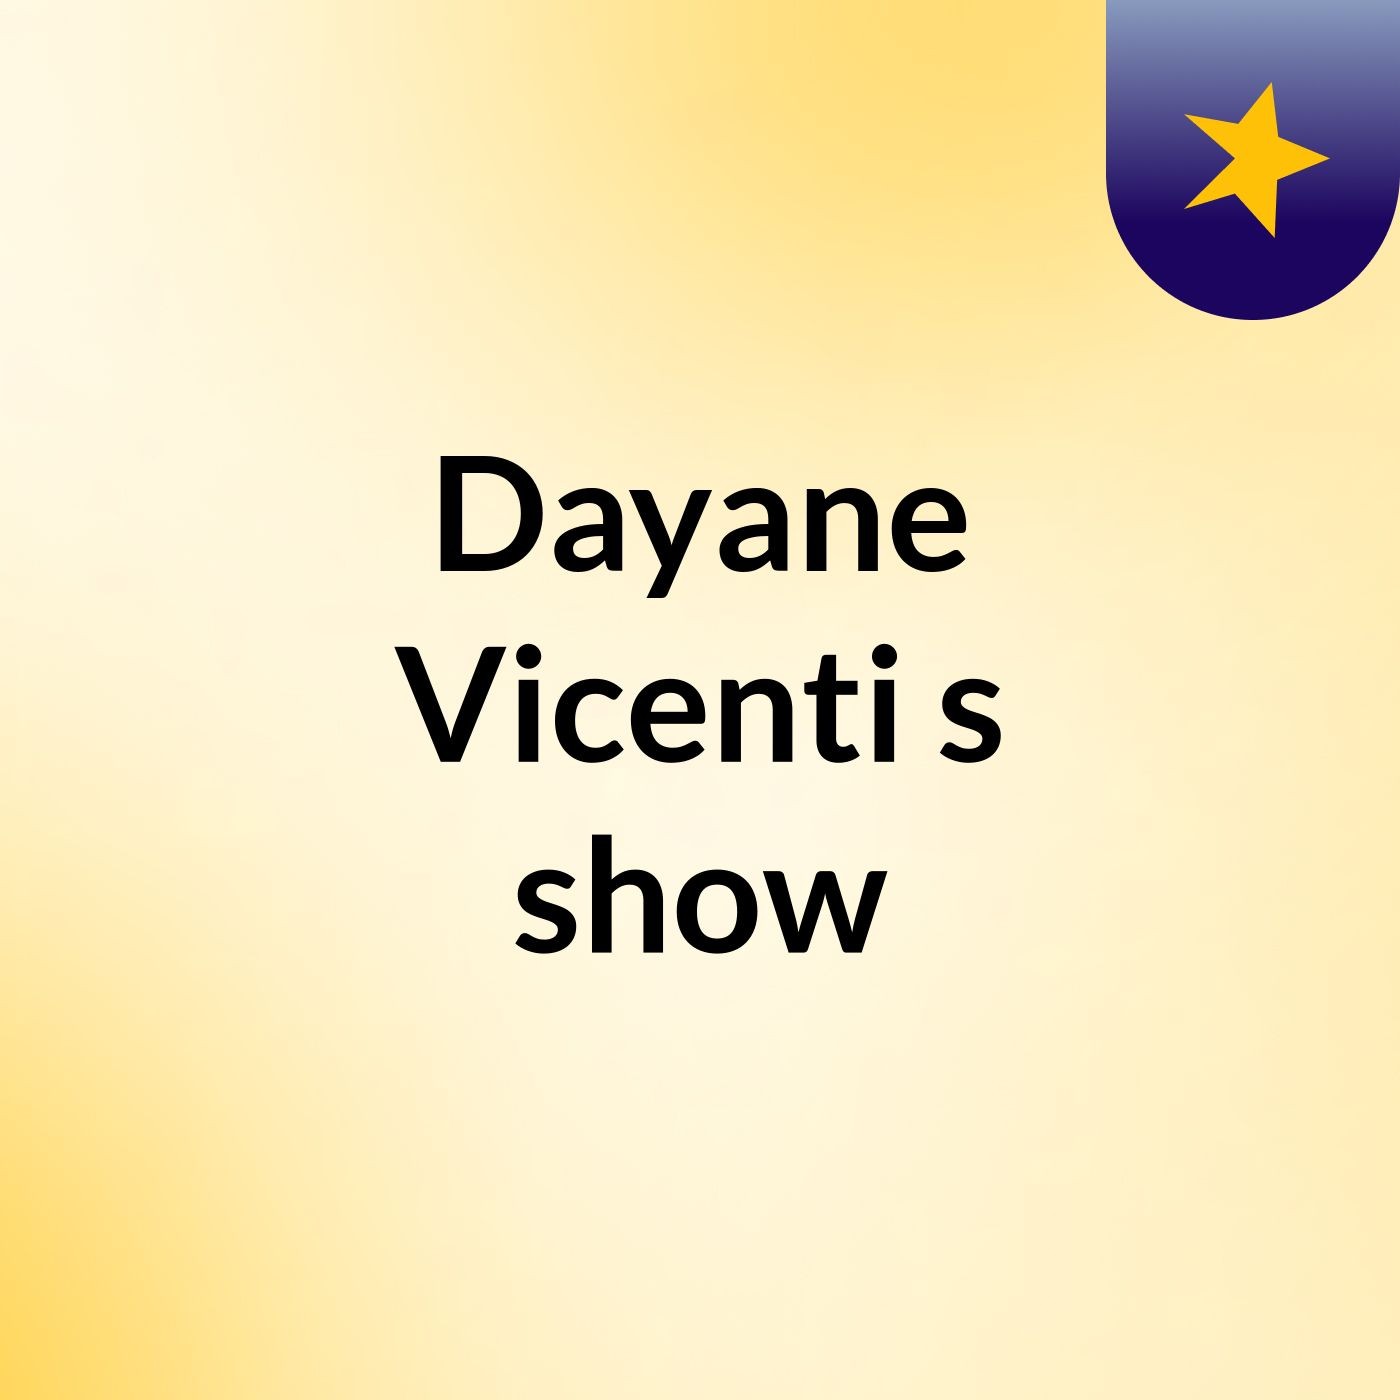 Dayane Vicenti's show